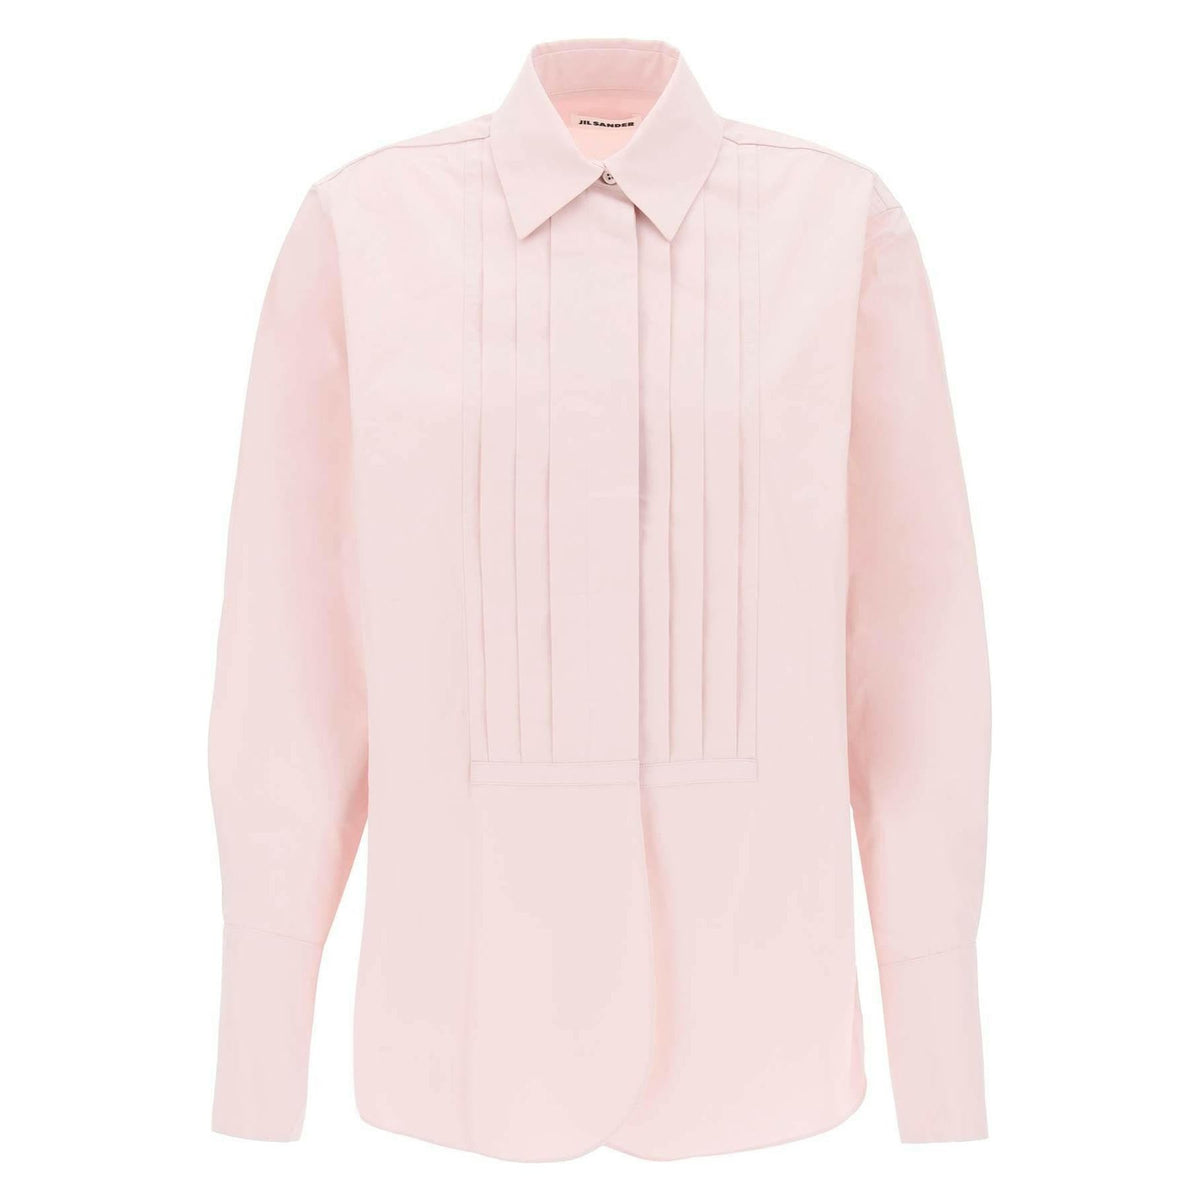 JIL SANDER - Pink Organic Cotton Tuxedo Shirt - JOHN JULIA